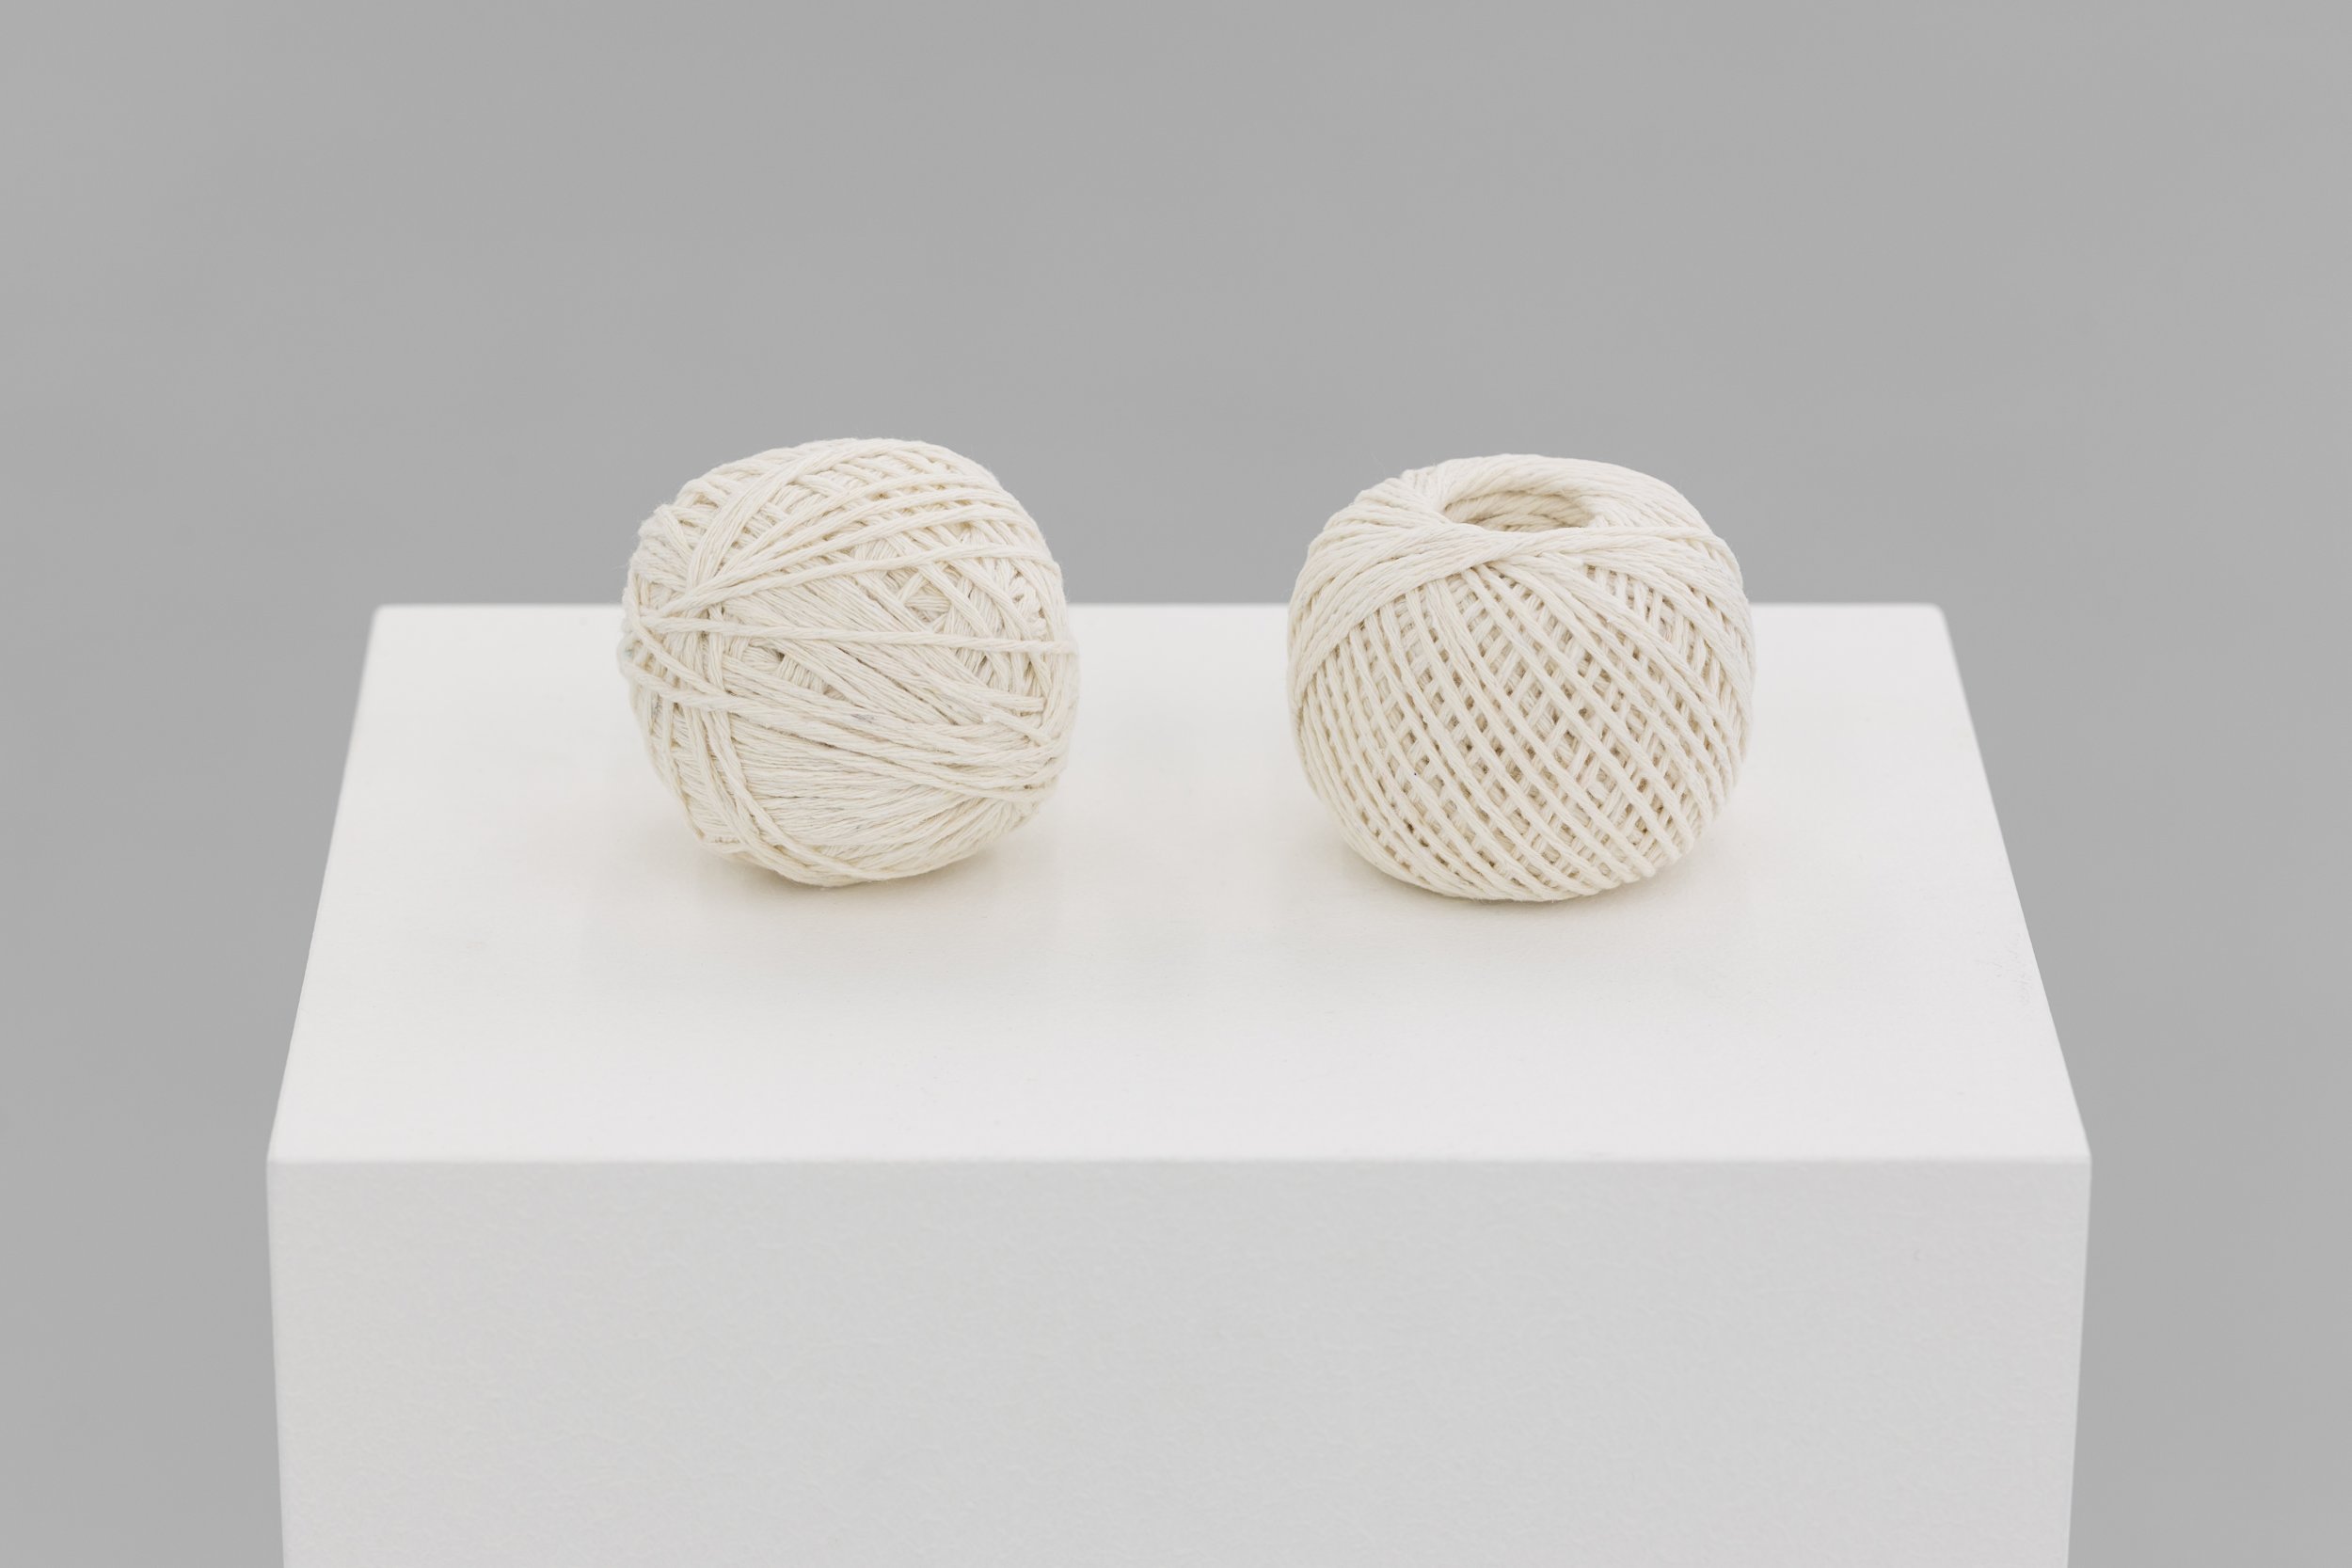 John Wood and Paul Harrison, 2 balls of string, 2015. Cotton string. ø 7 cm (each). Unique
